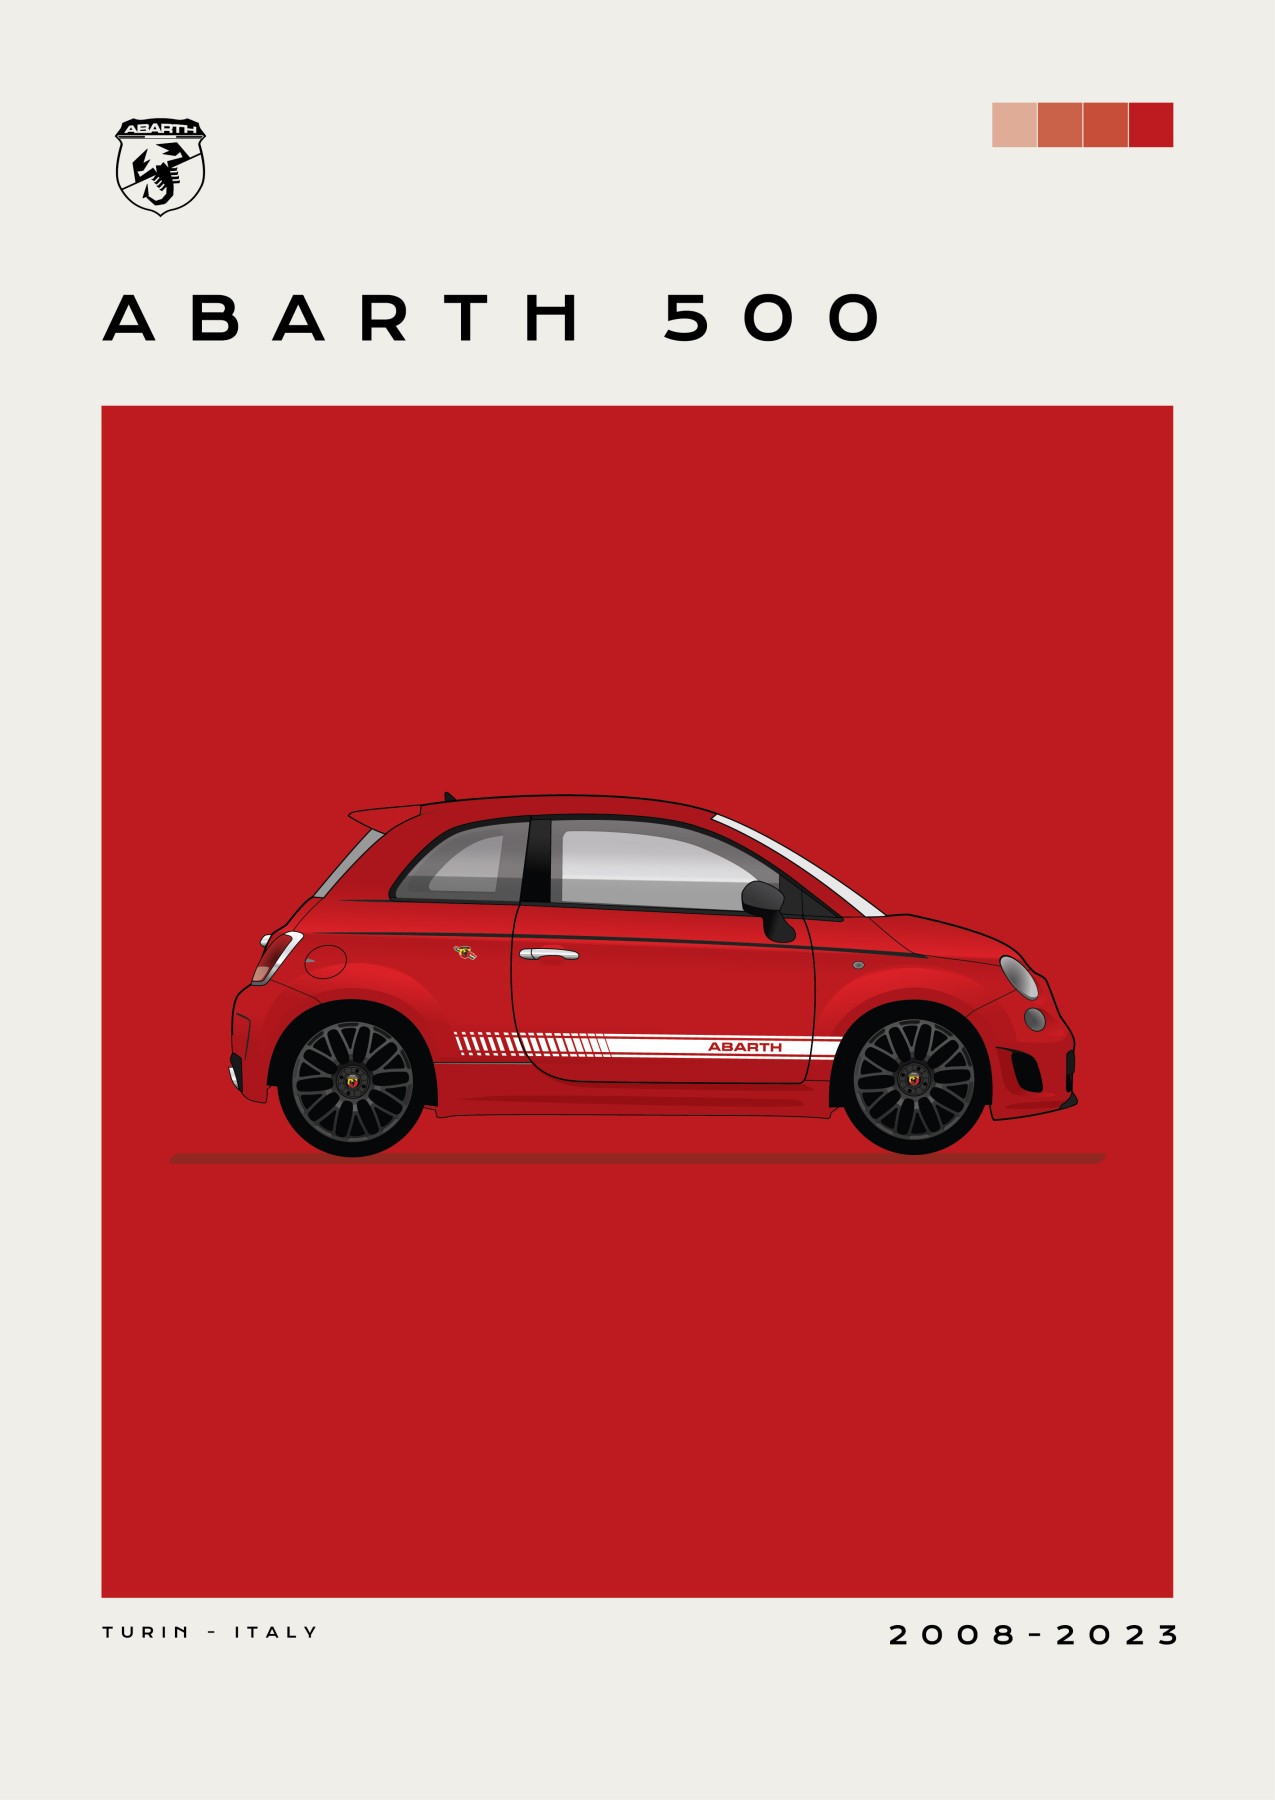 Abarth-500-Red-V2